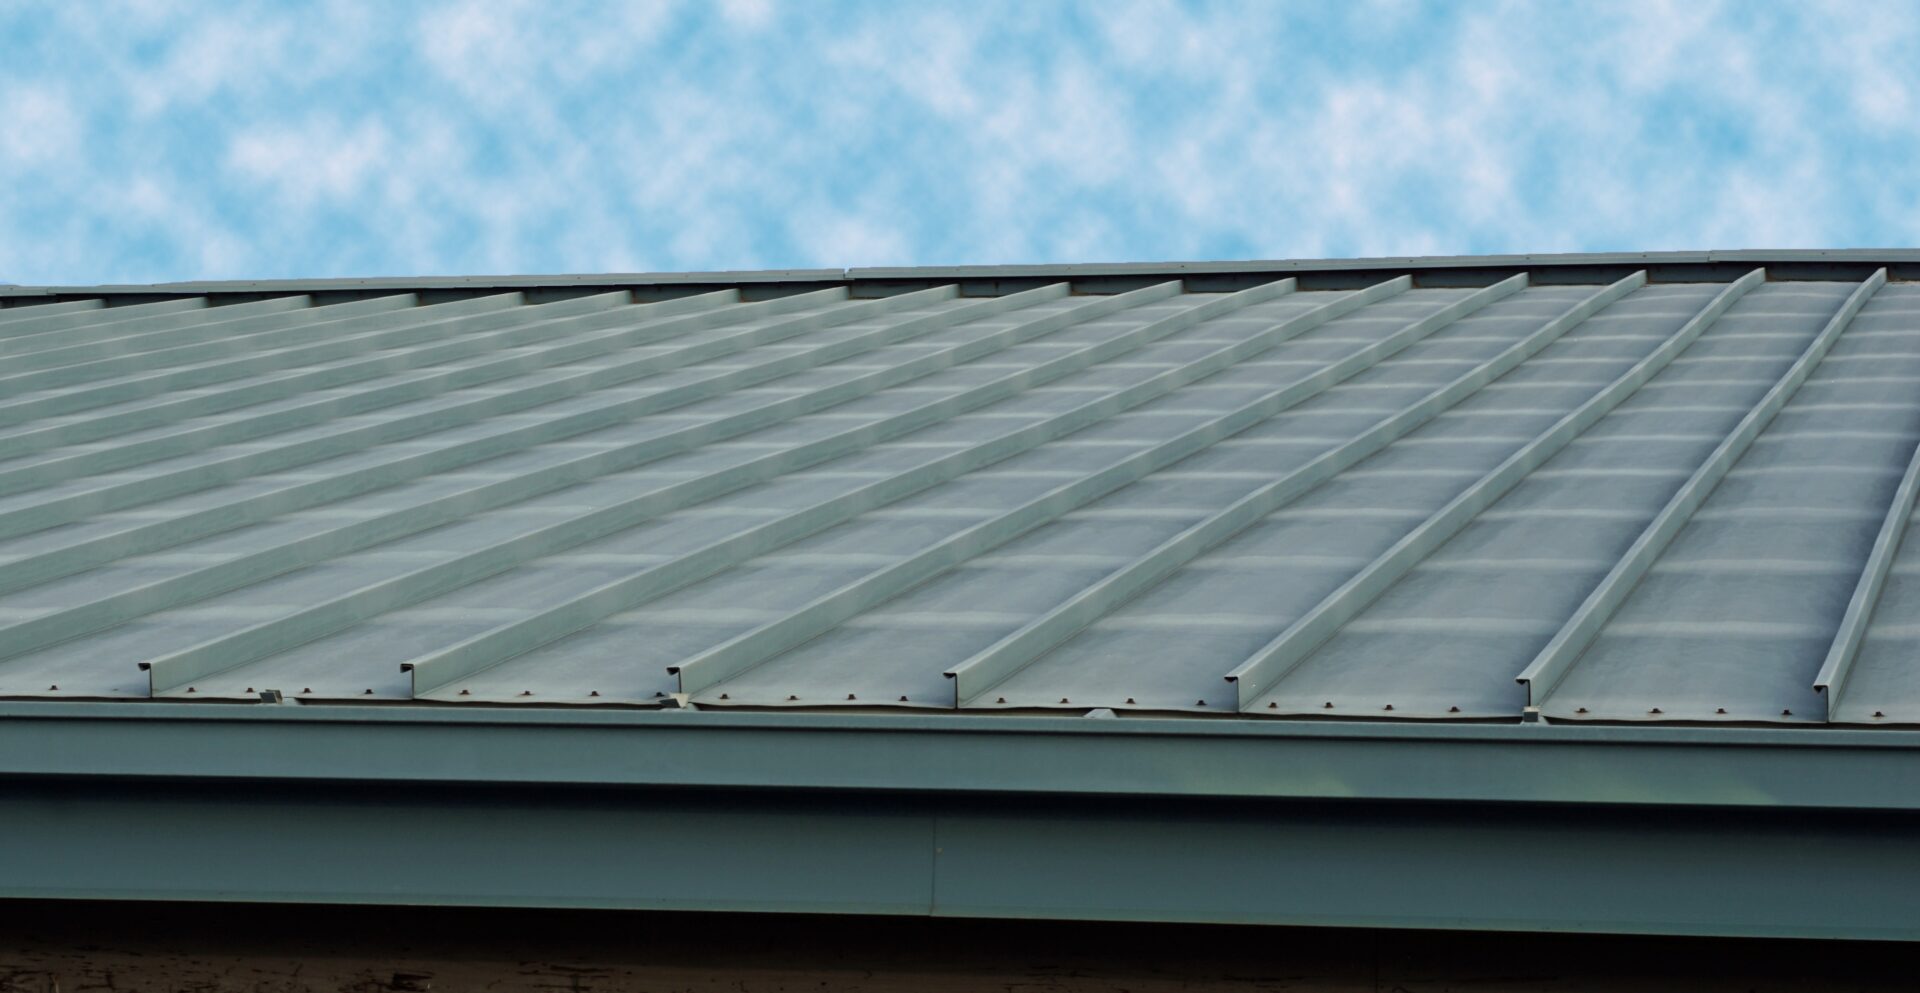 blue metal roof 2022 11 17 09 23 12 utc